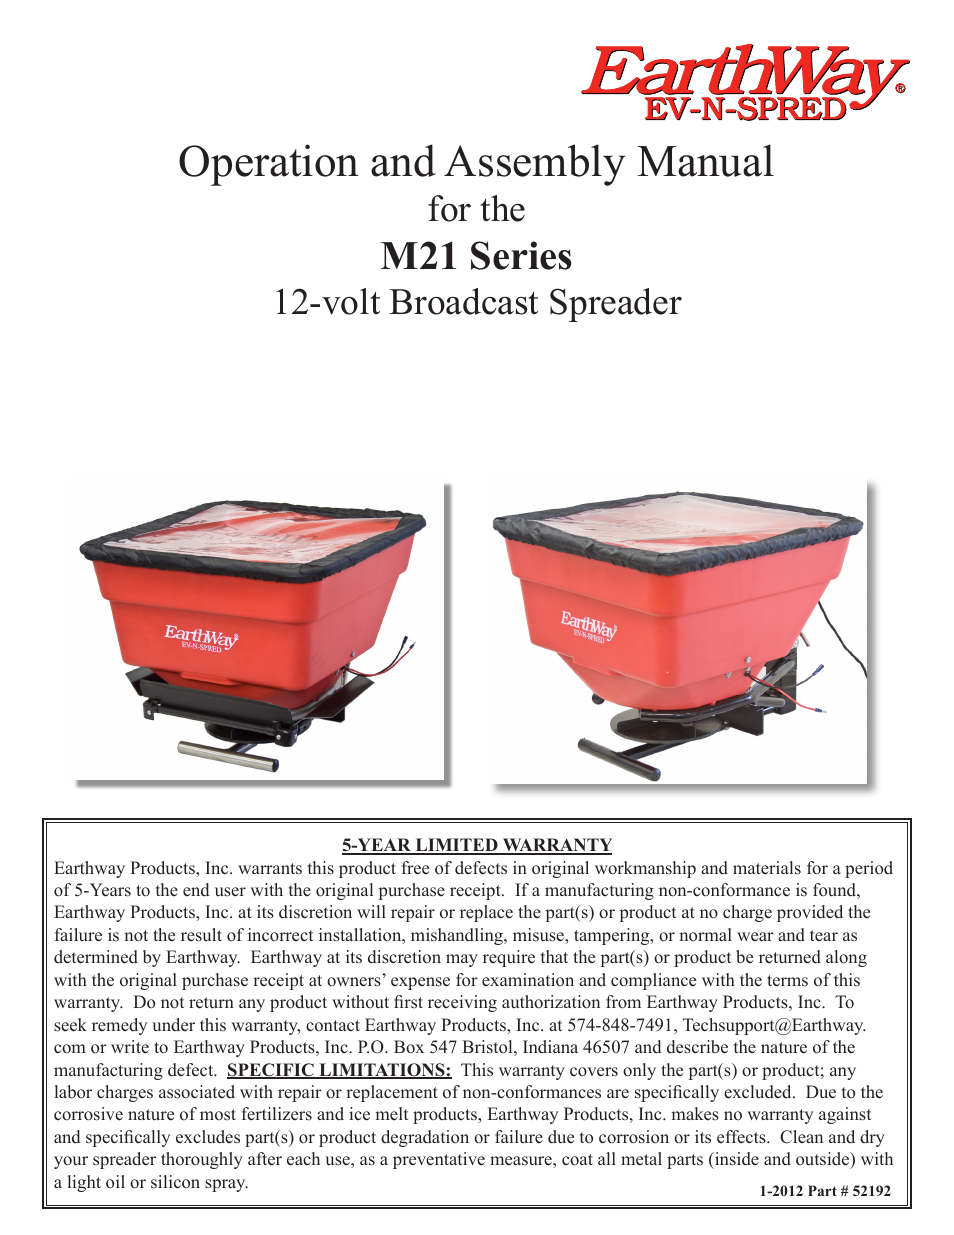 M21S Professional 12-Volt Broadcast Spreader